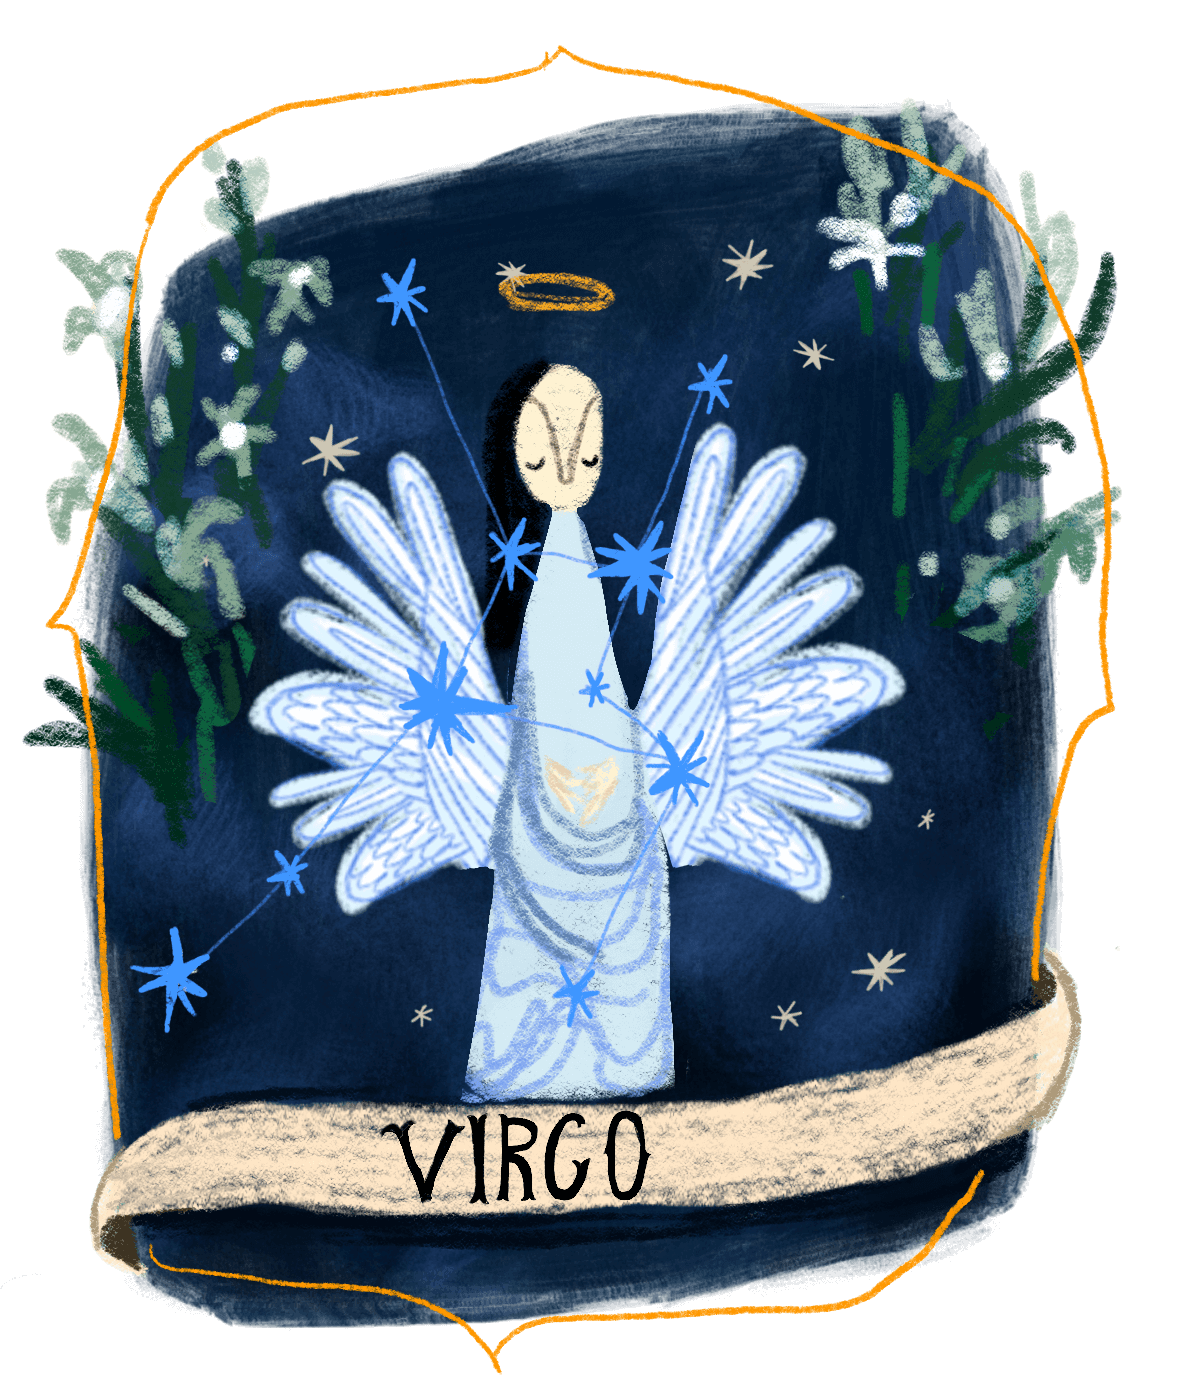 An illustration of the Virgo star sign.